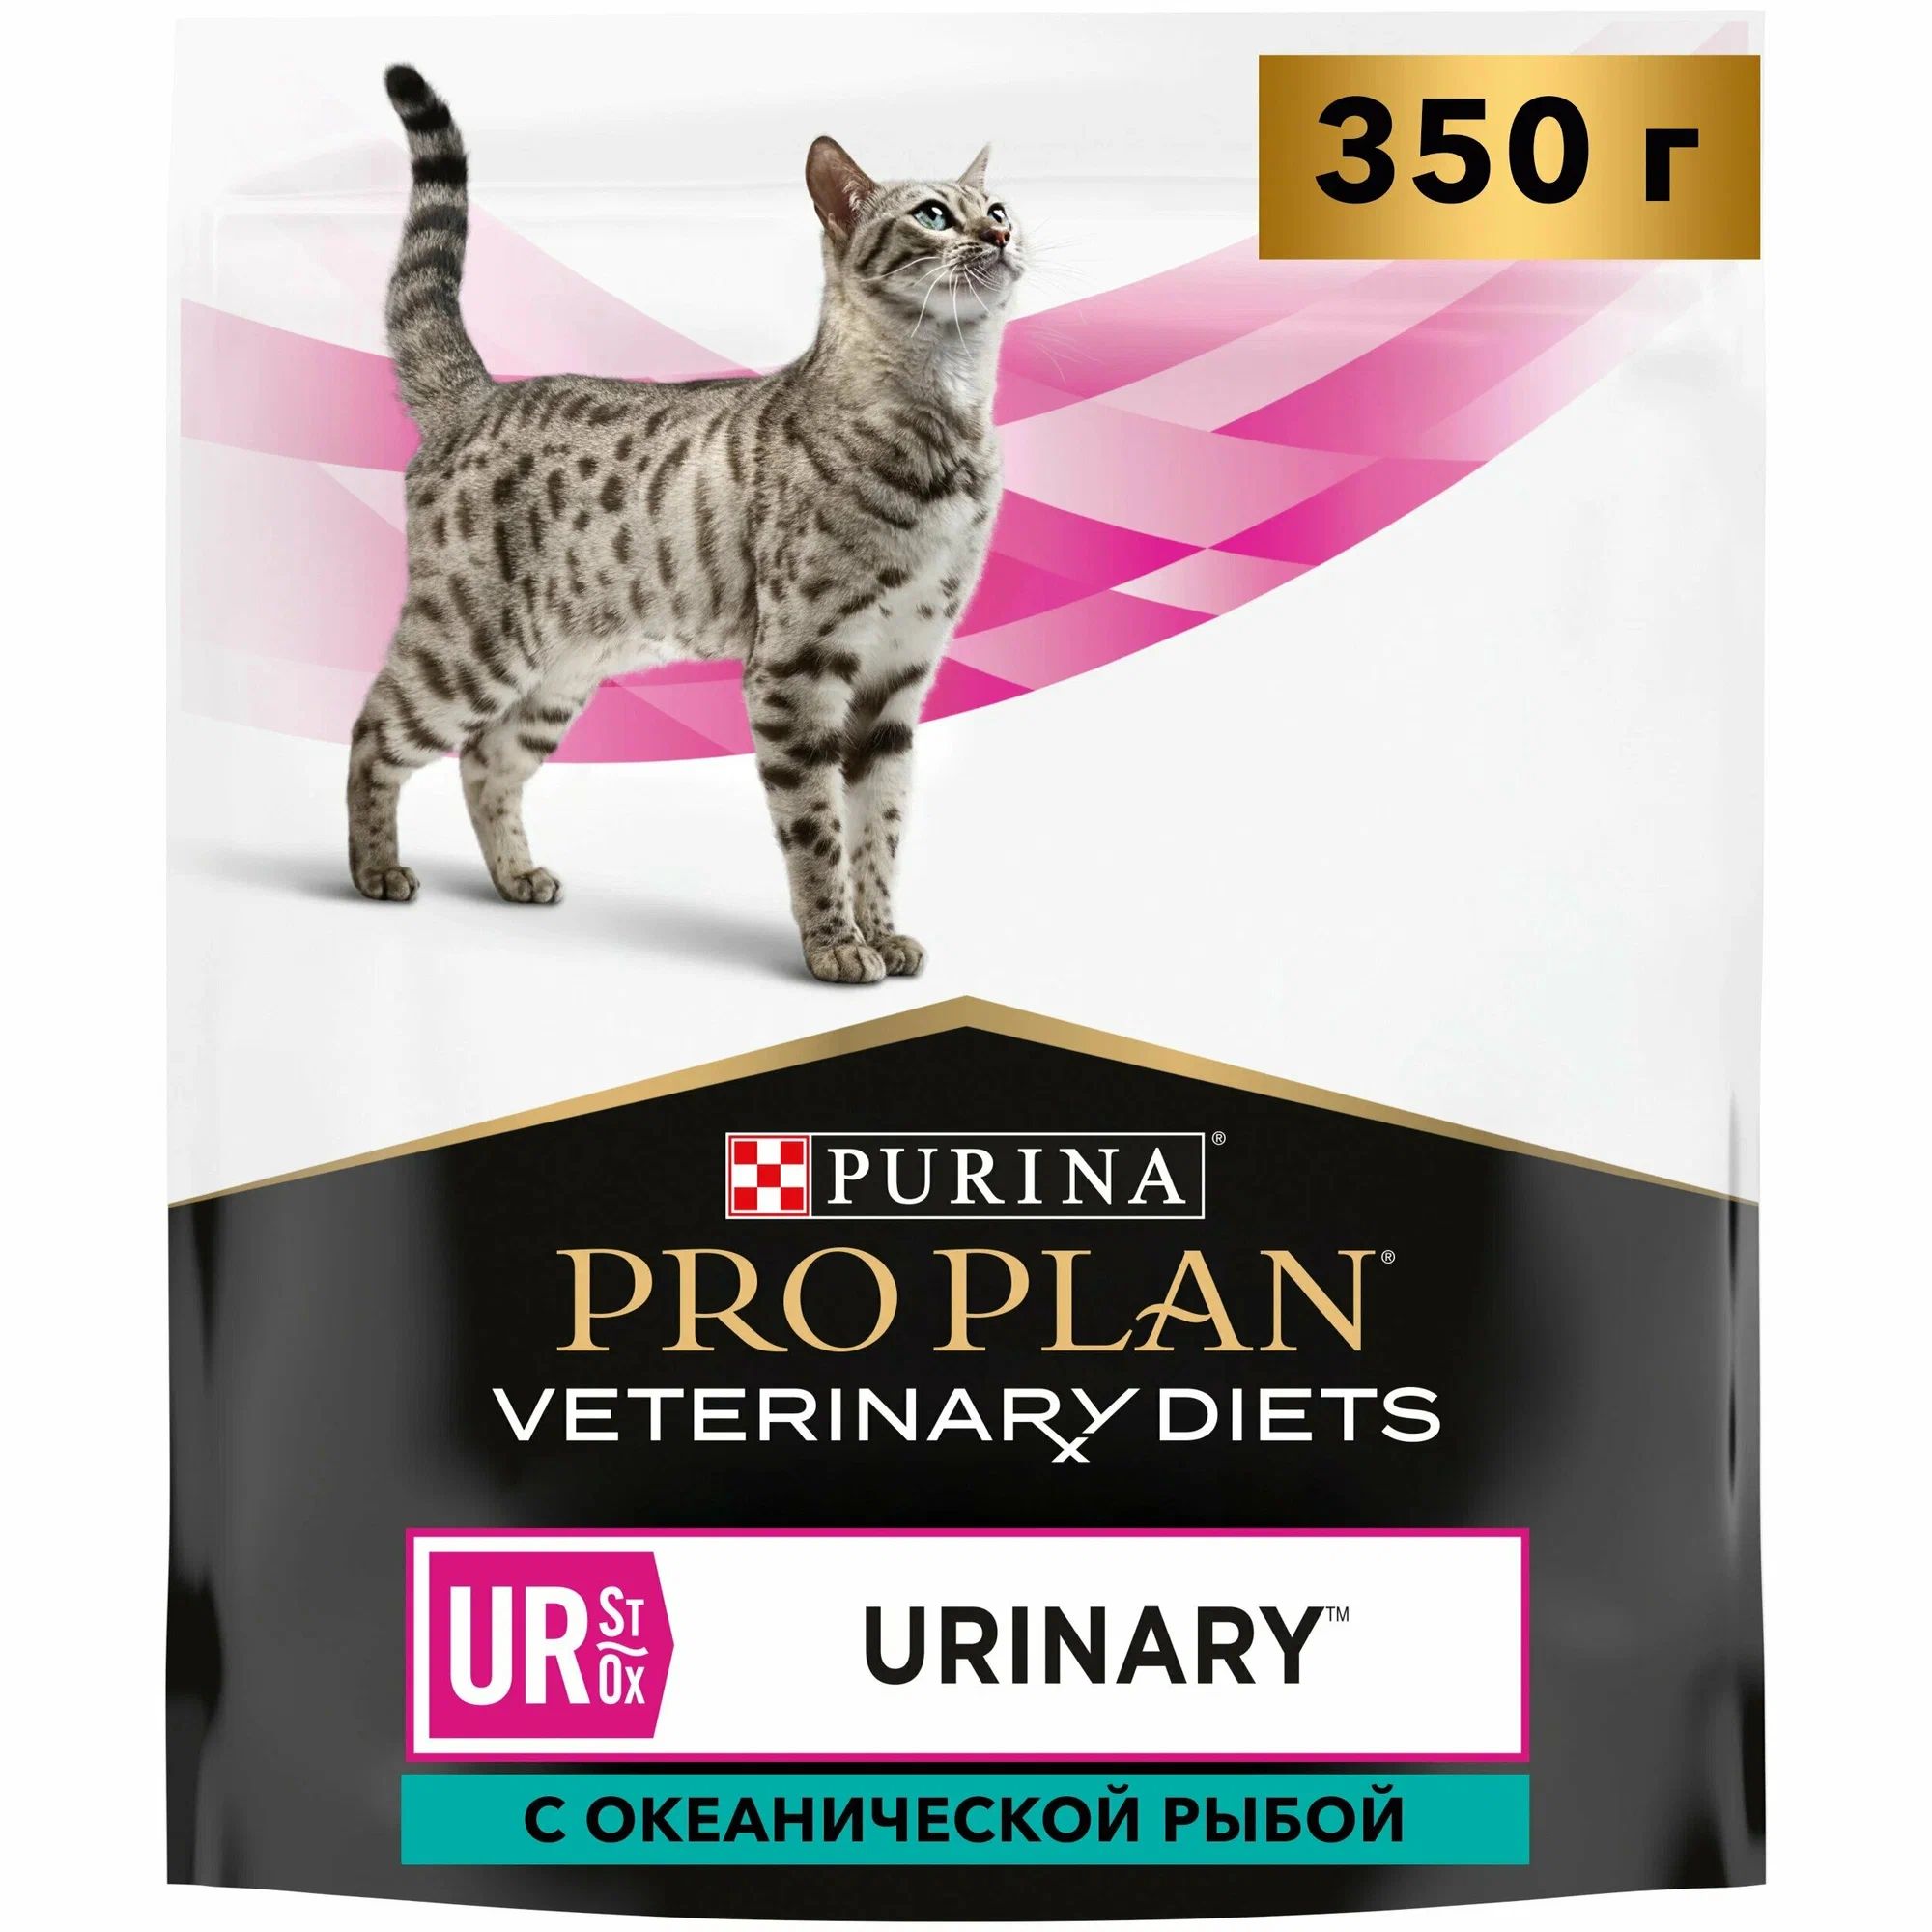 Сухой корм для кошек Purina Pro Plan Veterinary Diets UR с рыбой, 350 г